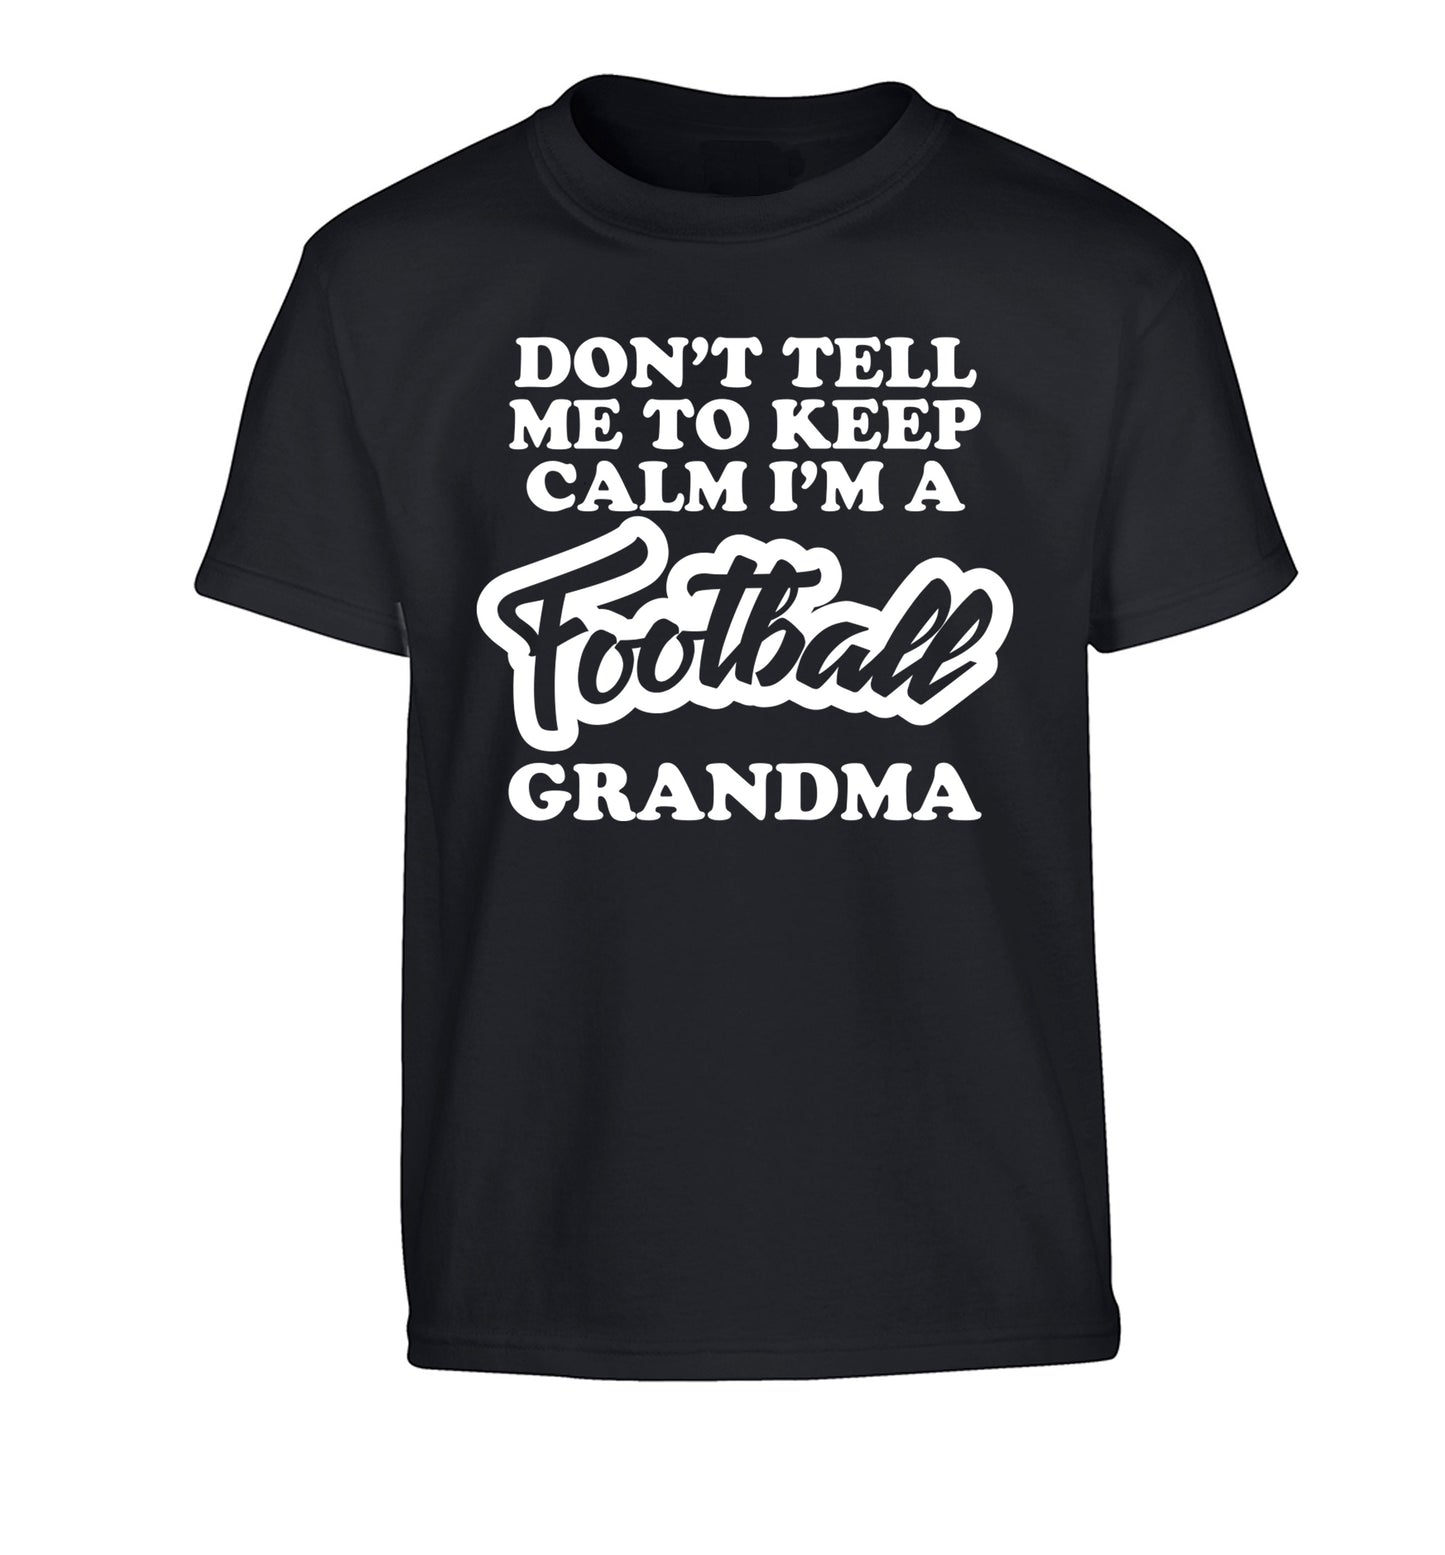 Don't tell me to keep calm I'm a football grandma Children's black Tshirt 12-14 Years